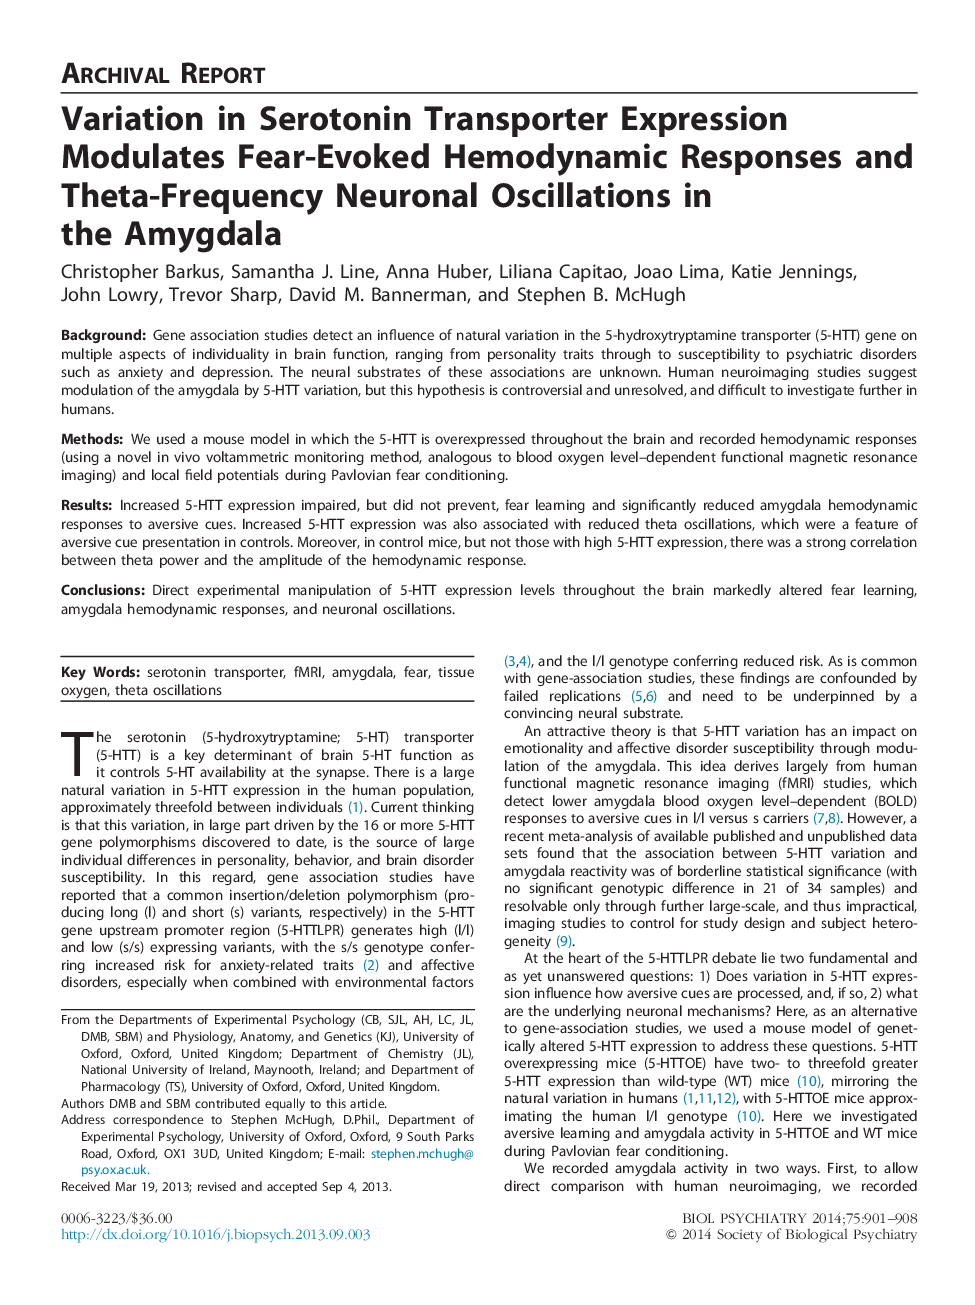 Variation in Serotonin Transporter Expression Modulates Fear-Evoked Hemodynamic Responses and Theta-Frequency Neuronal Oscillations in the Amygdala